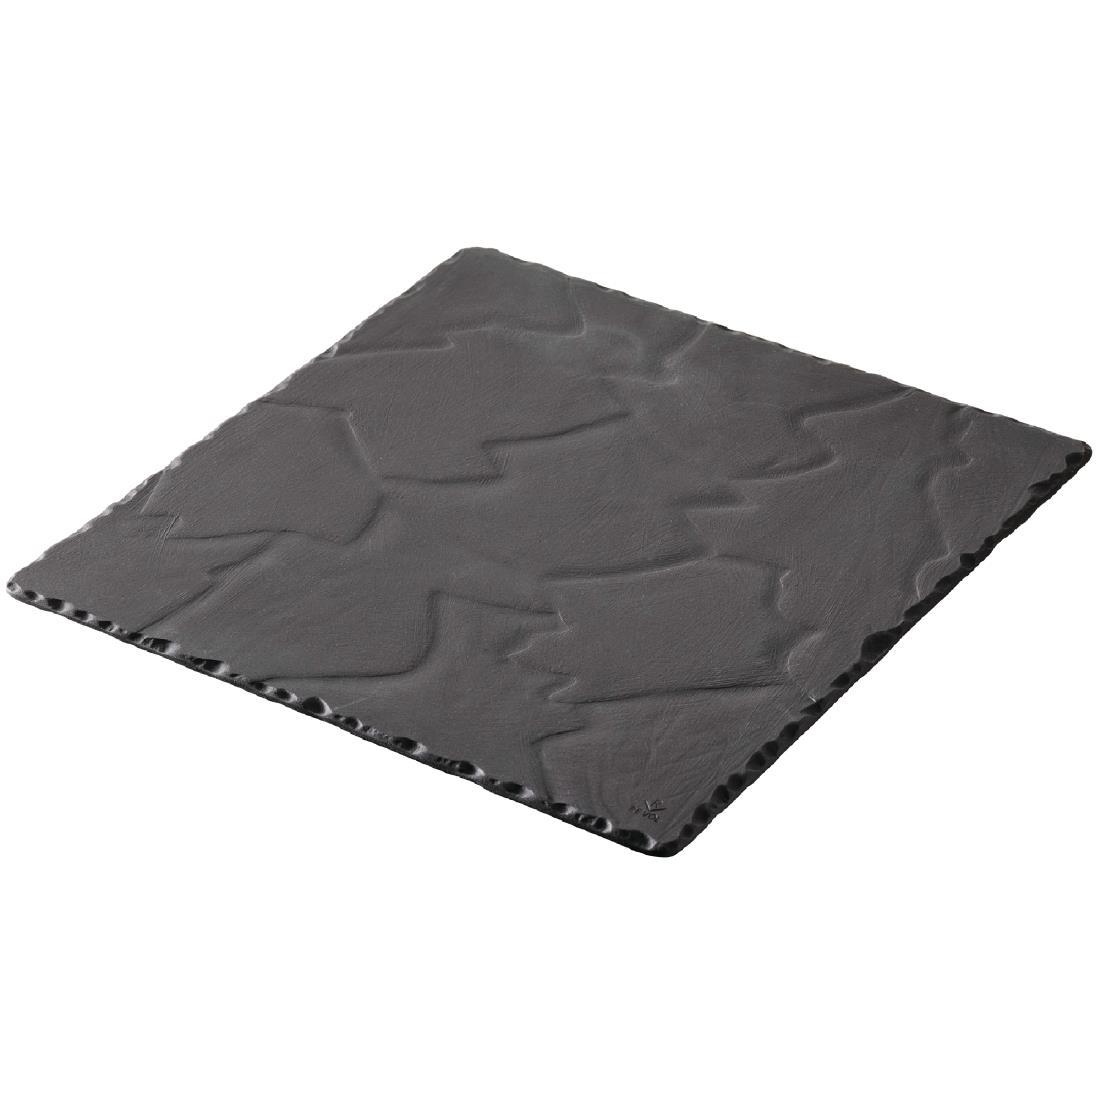 Revol Basalt Square Plates 200mm (Pack of 6) - DM323  - 1